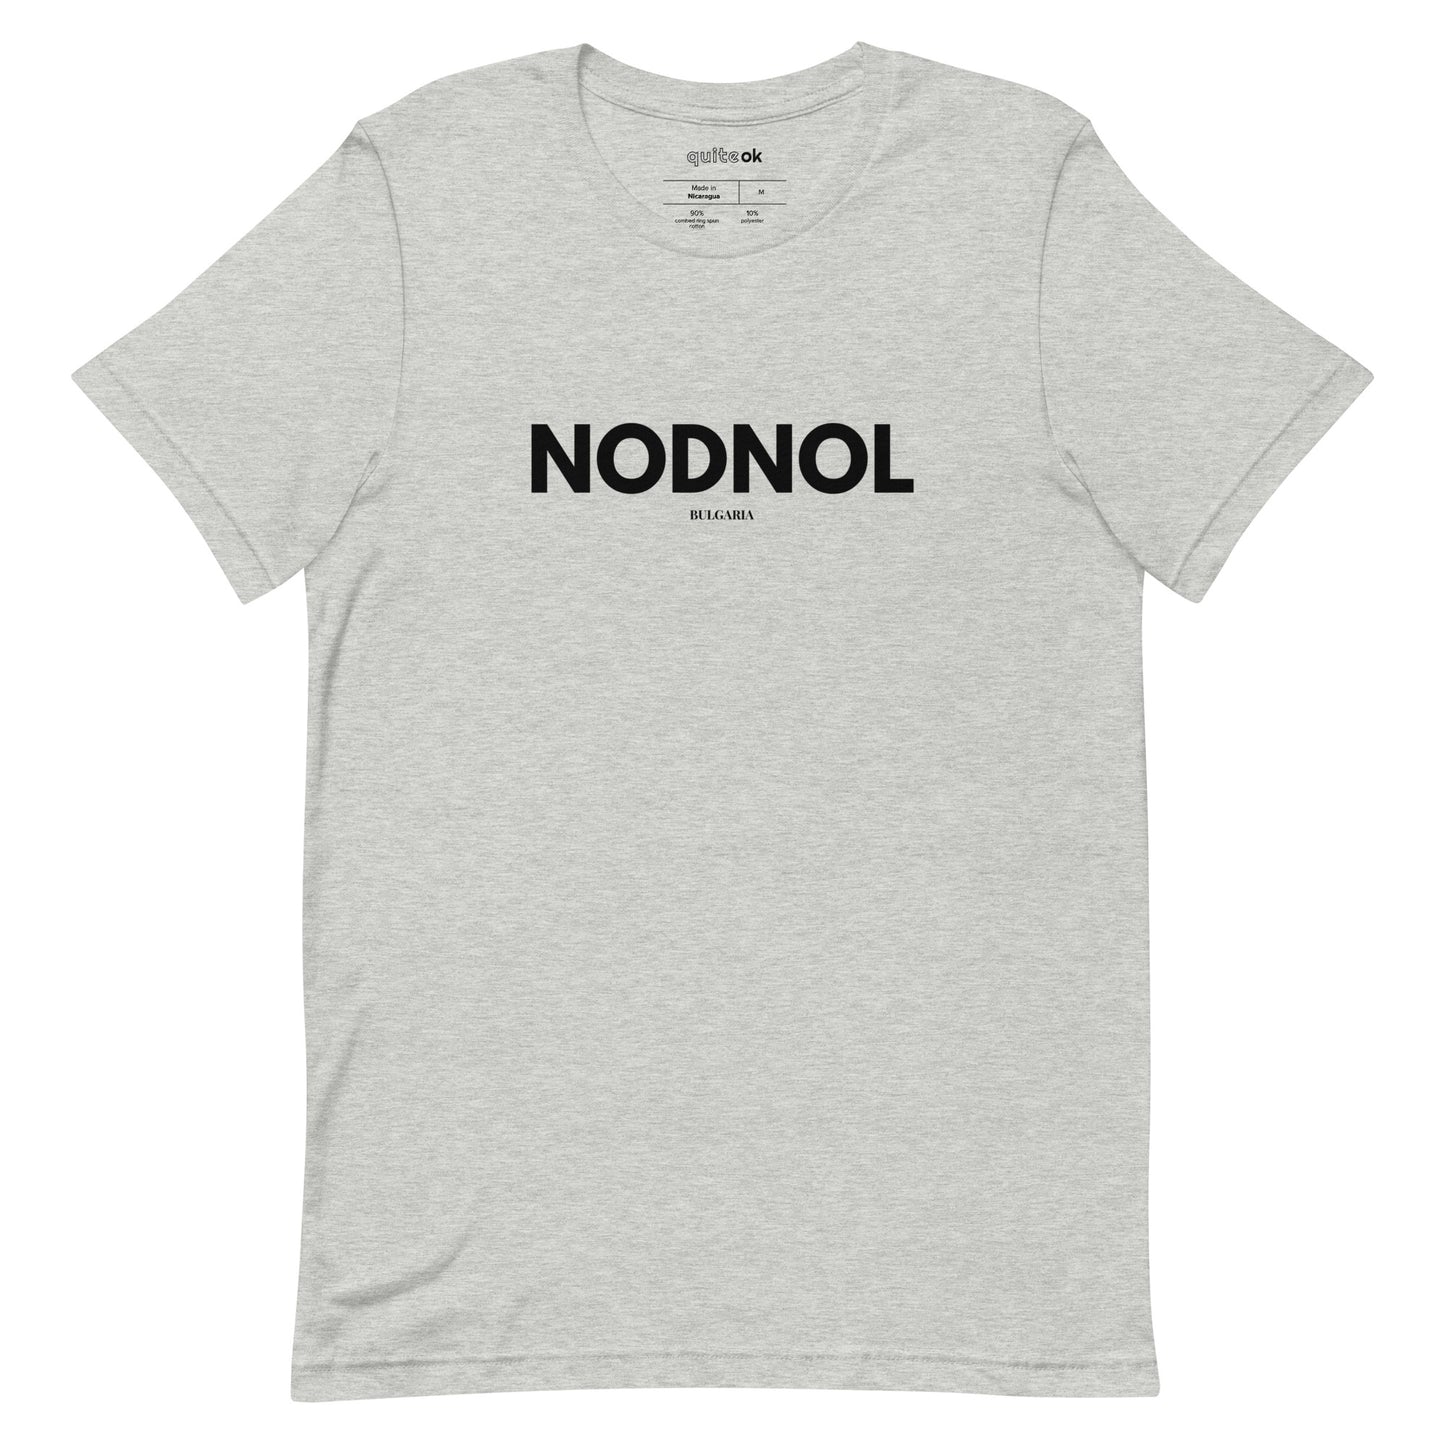 Nodnol Minimal Comedy Quote T-Shirt